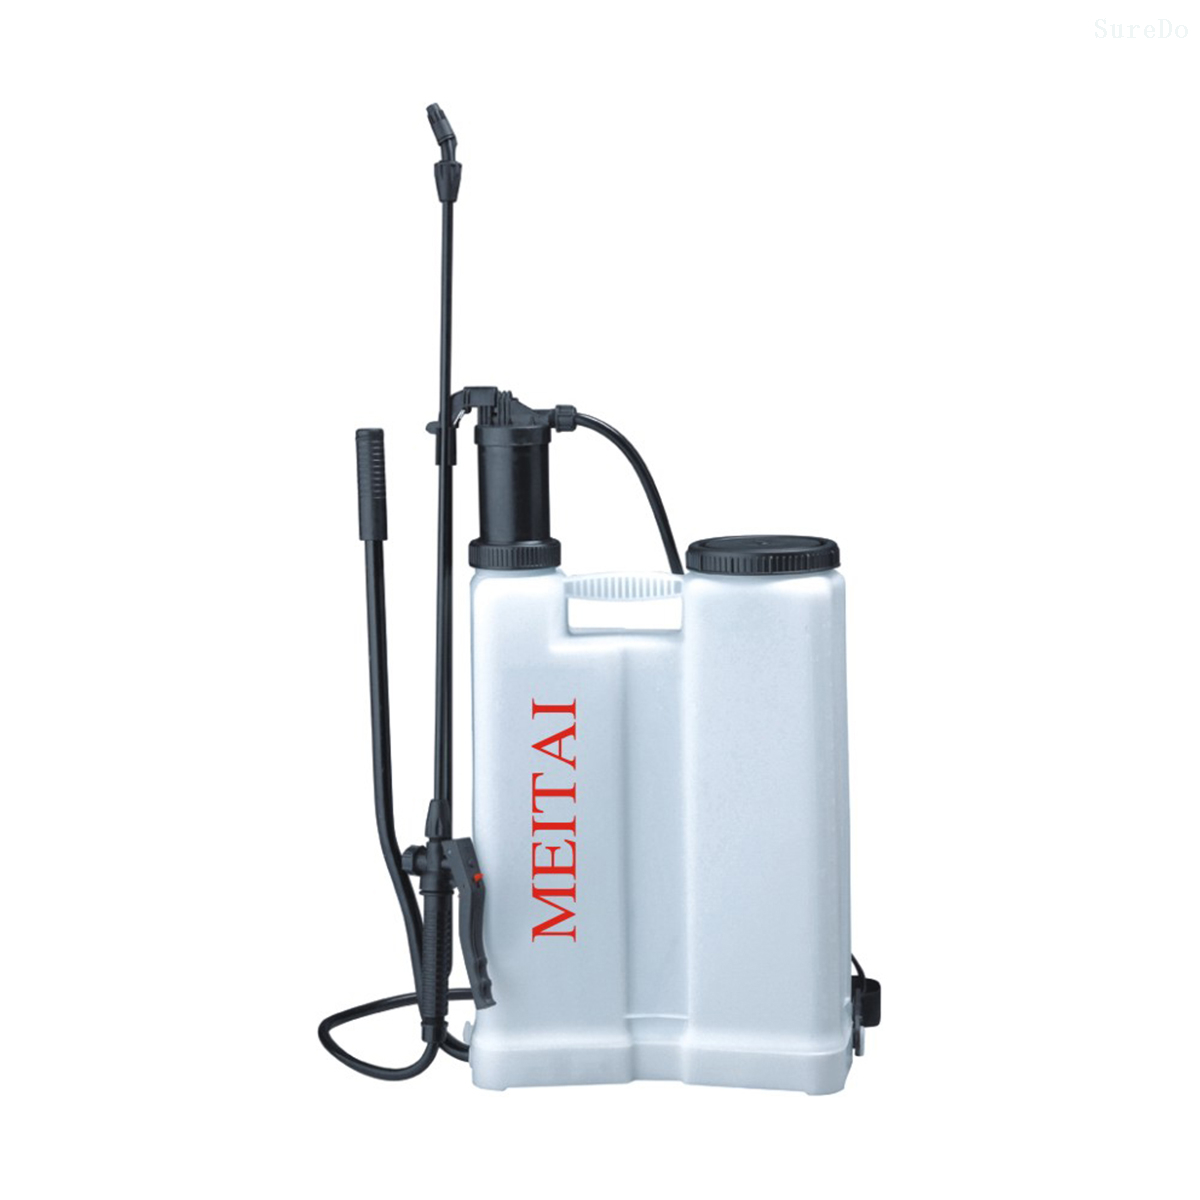 4 Gallon Backpack Sprayer with Heavy Duty Pump